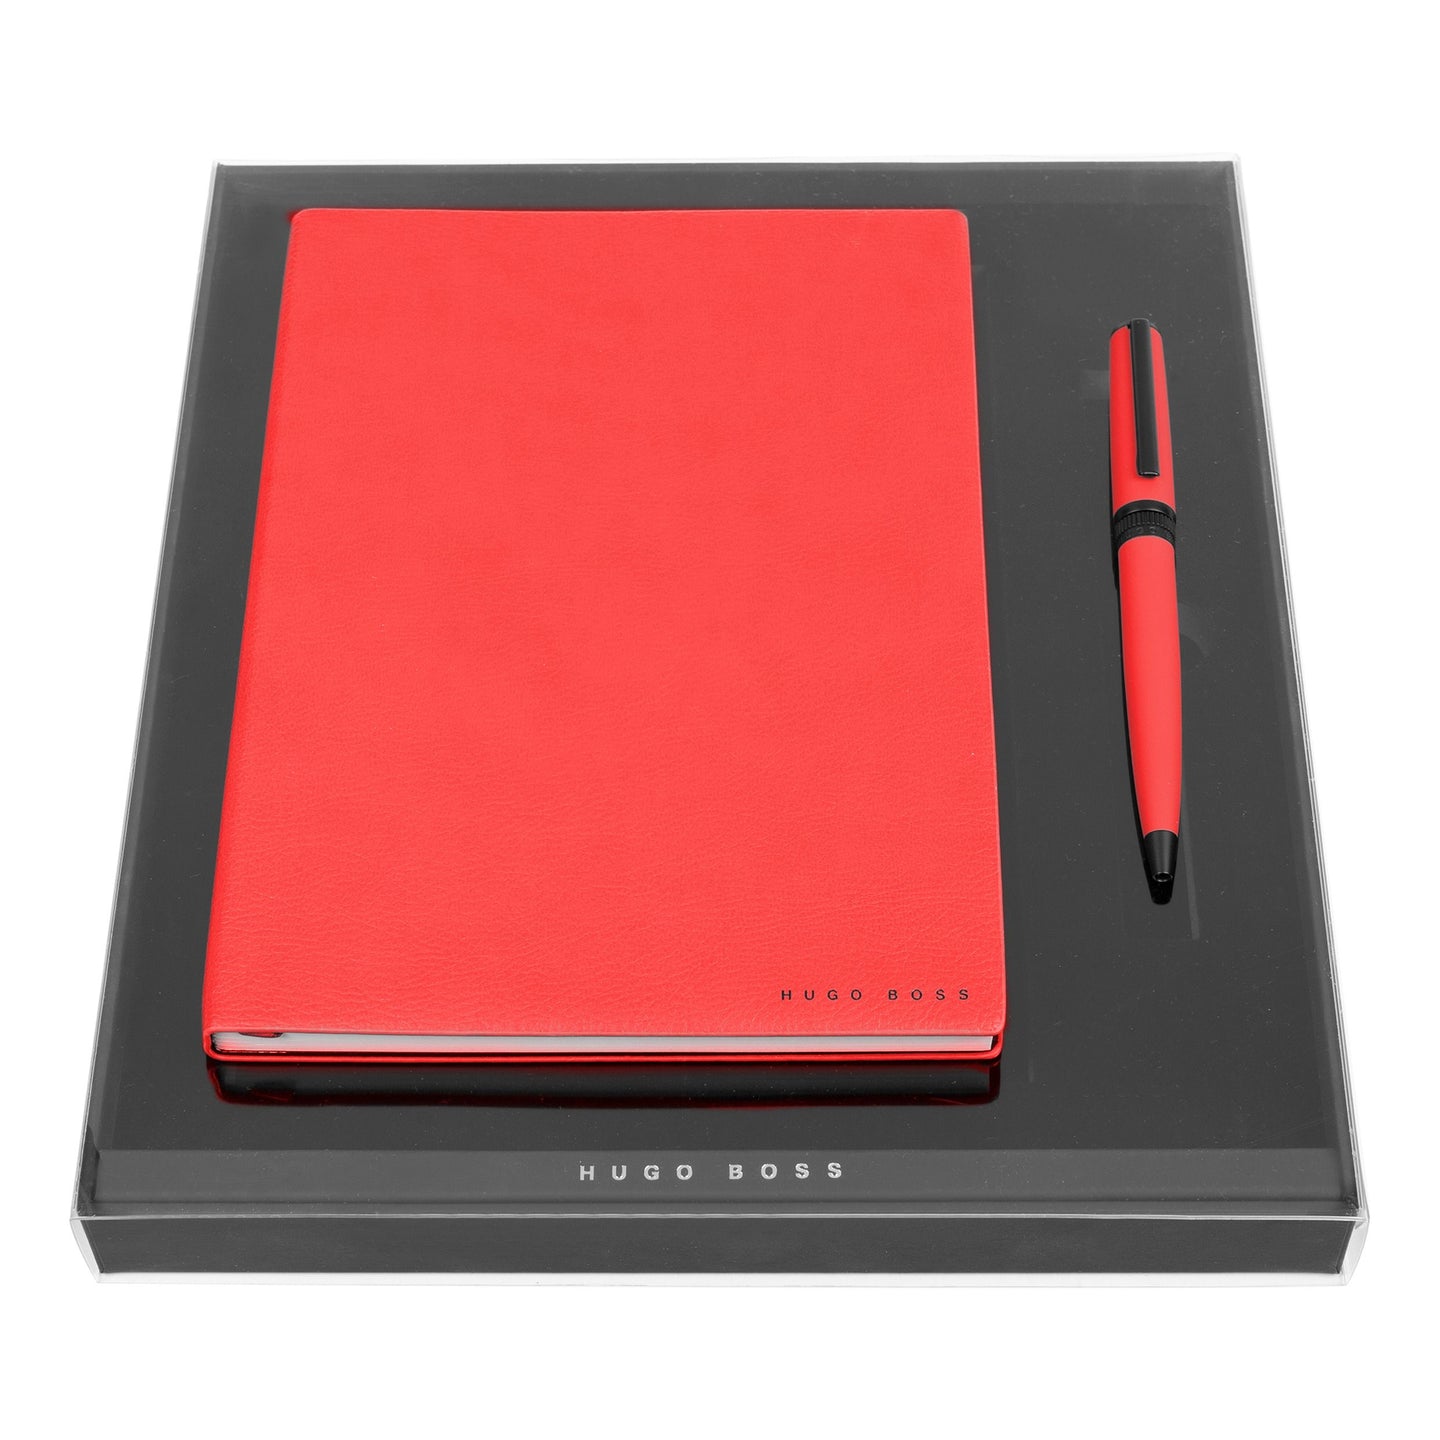 Hugo Boss Schreibset GEAR Matrix Red | Kugelschreiber und A5 Notizblock